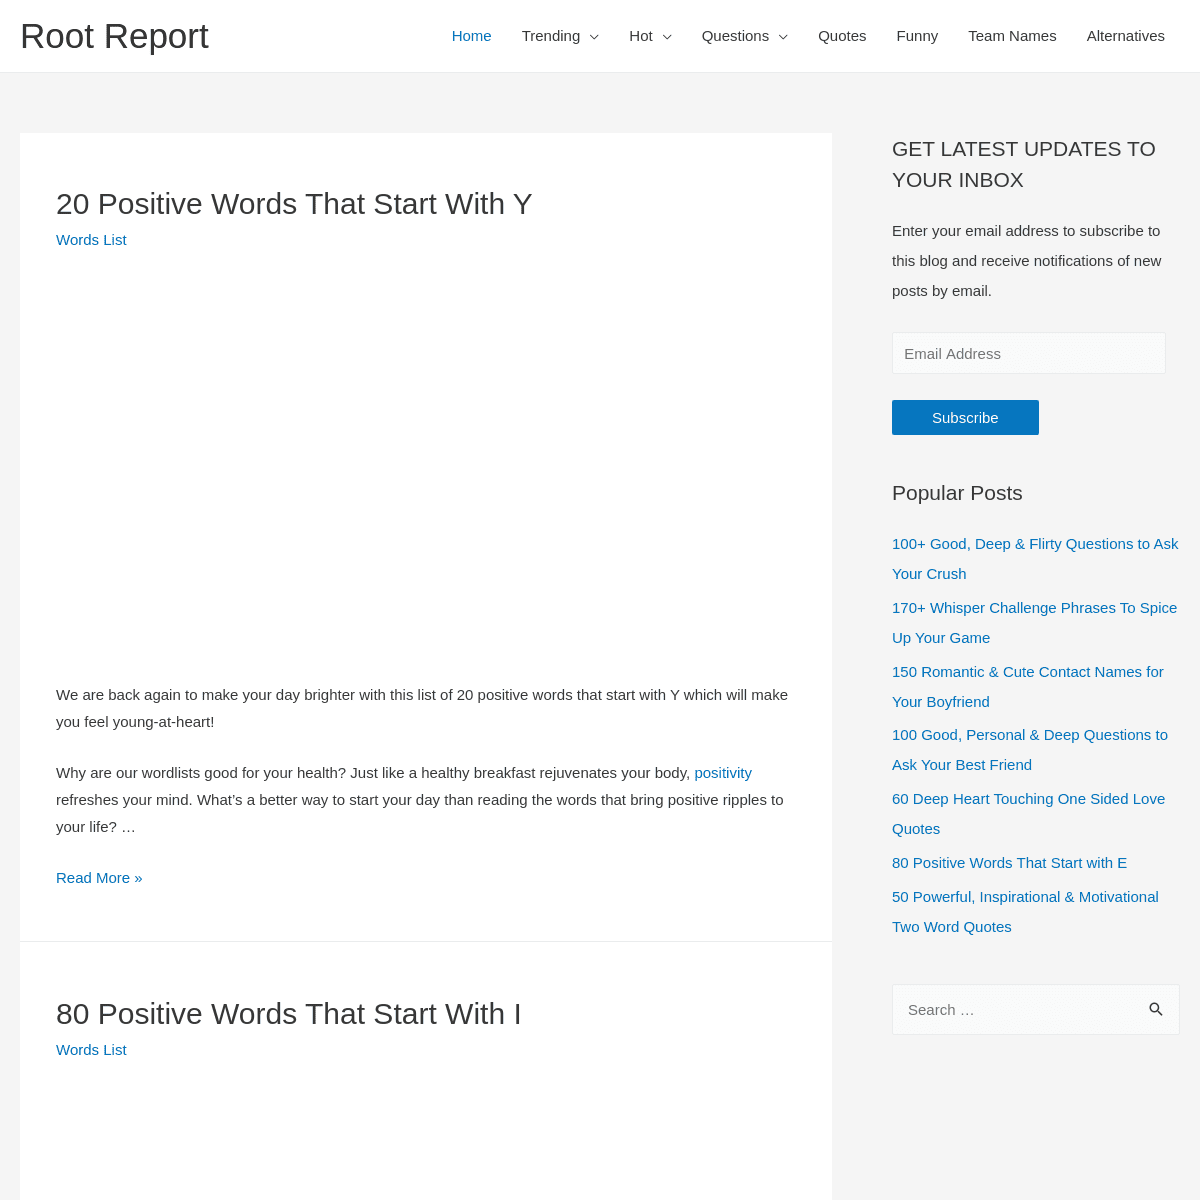 A complete backup of https://rootreport.com